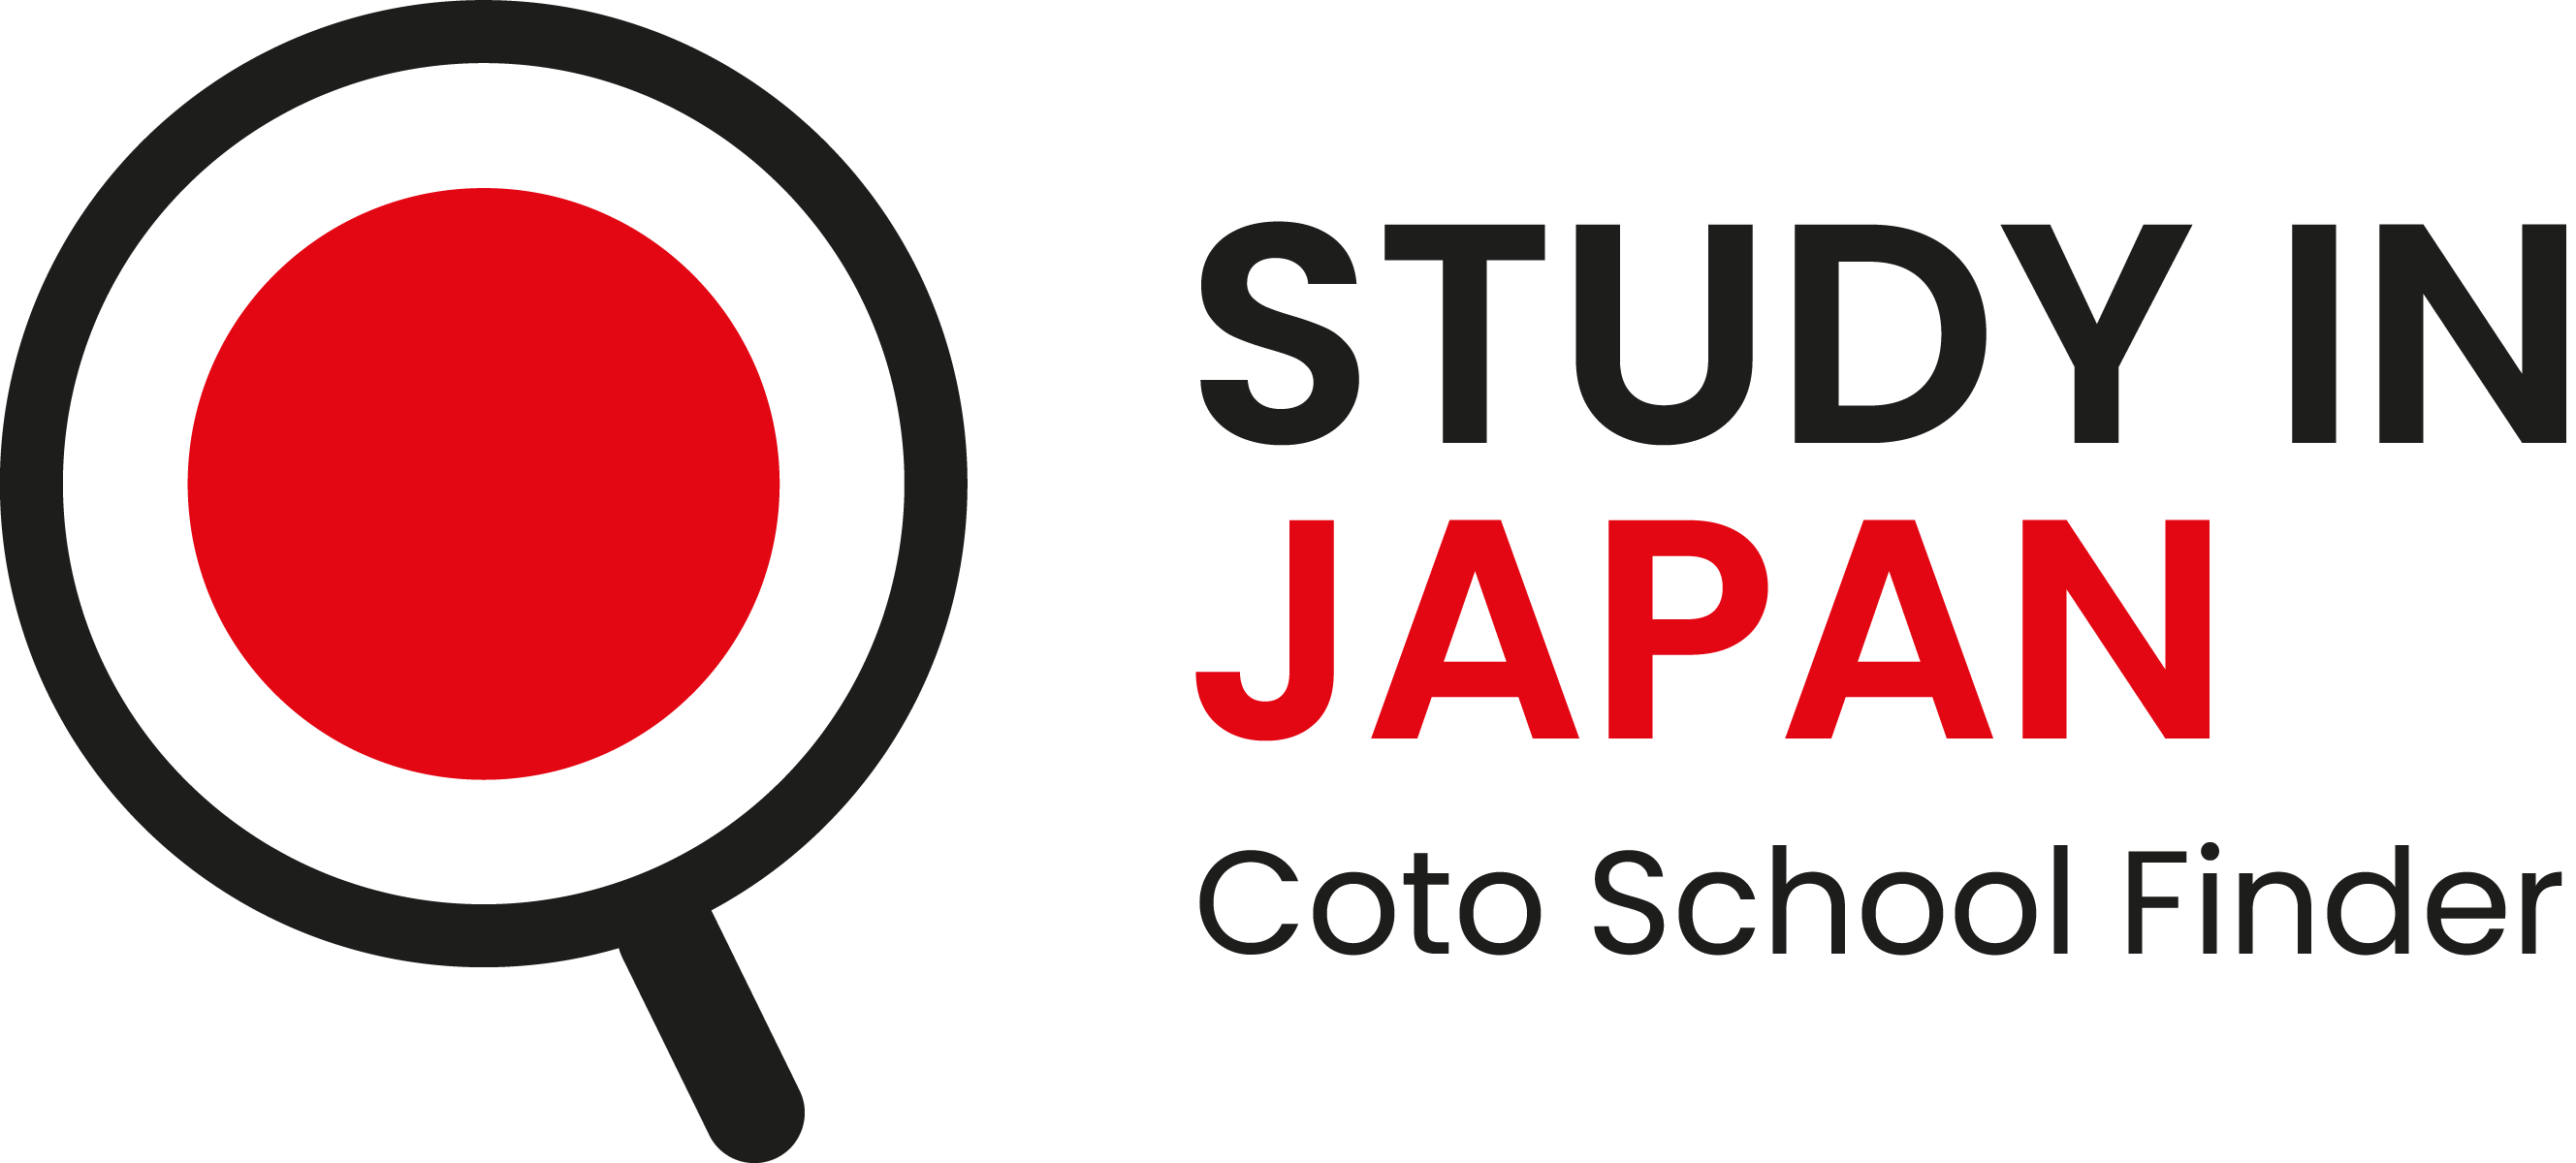 japanese university personal statement